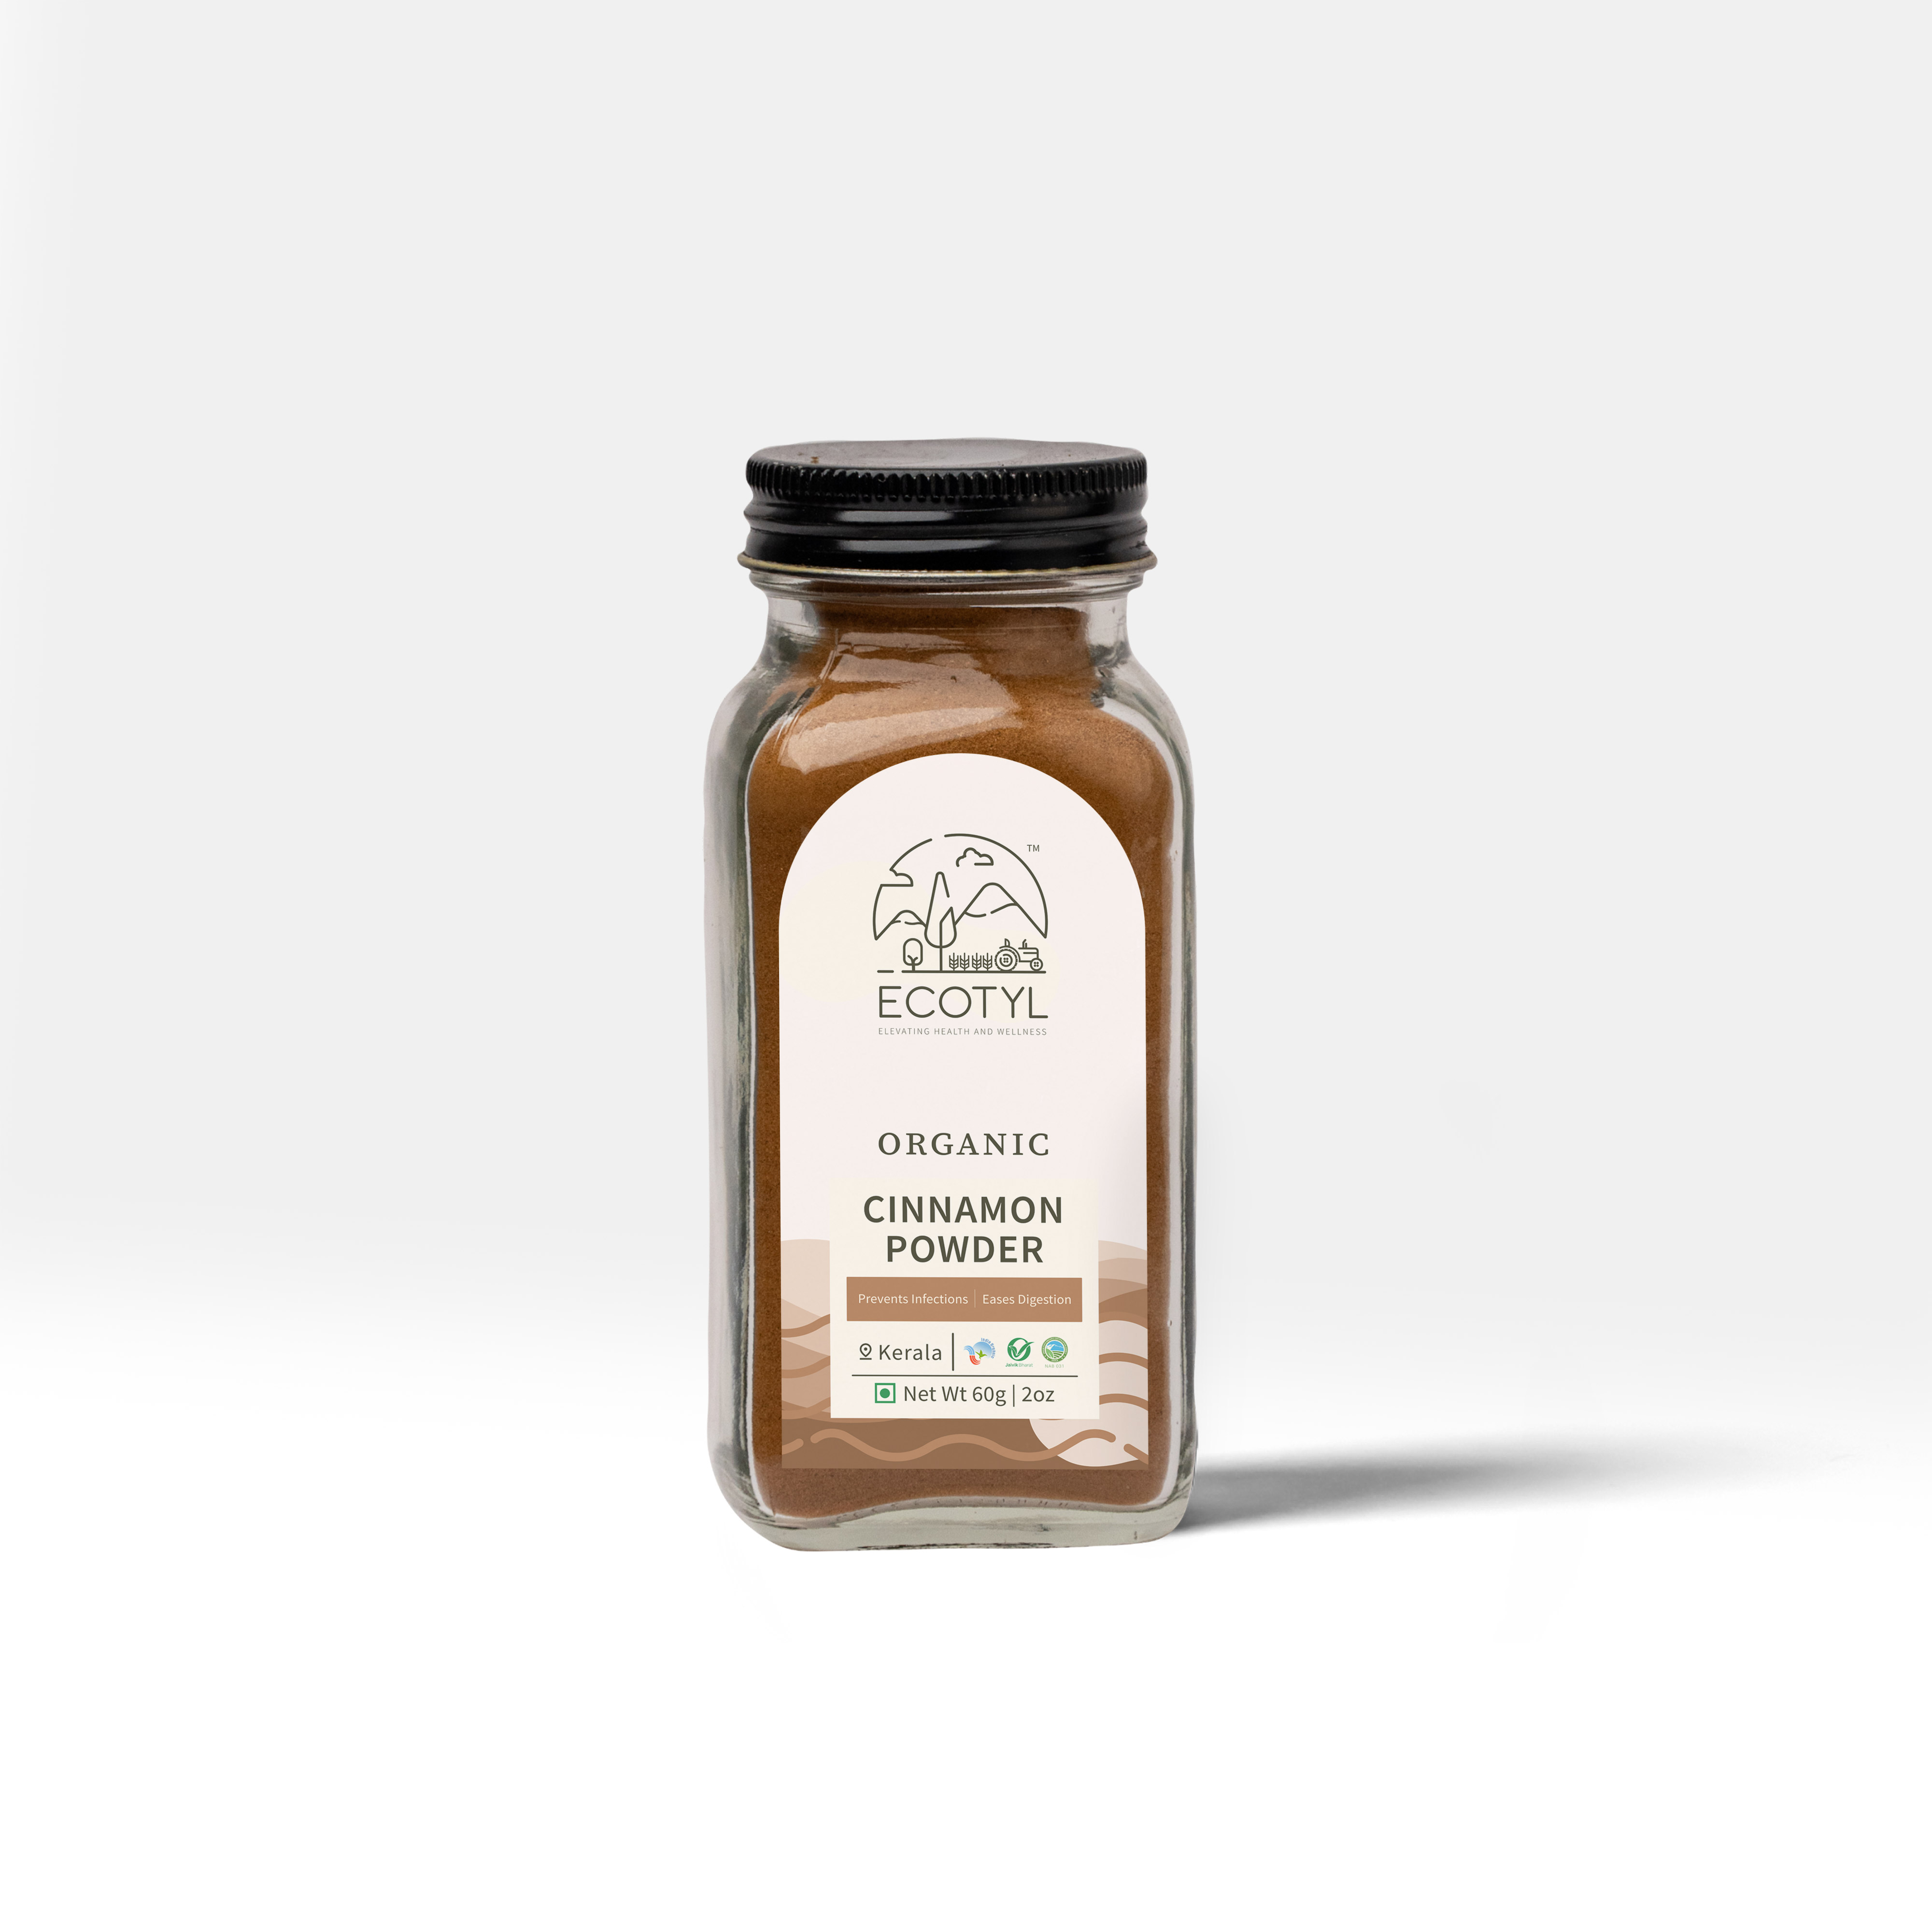 Buy Ecotyl Organic Cinnamon Powder - 60 g at Best Price Online